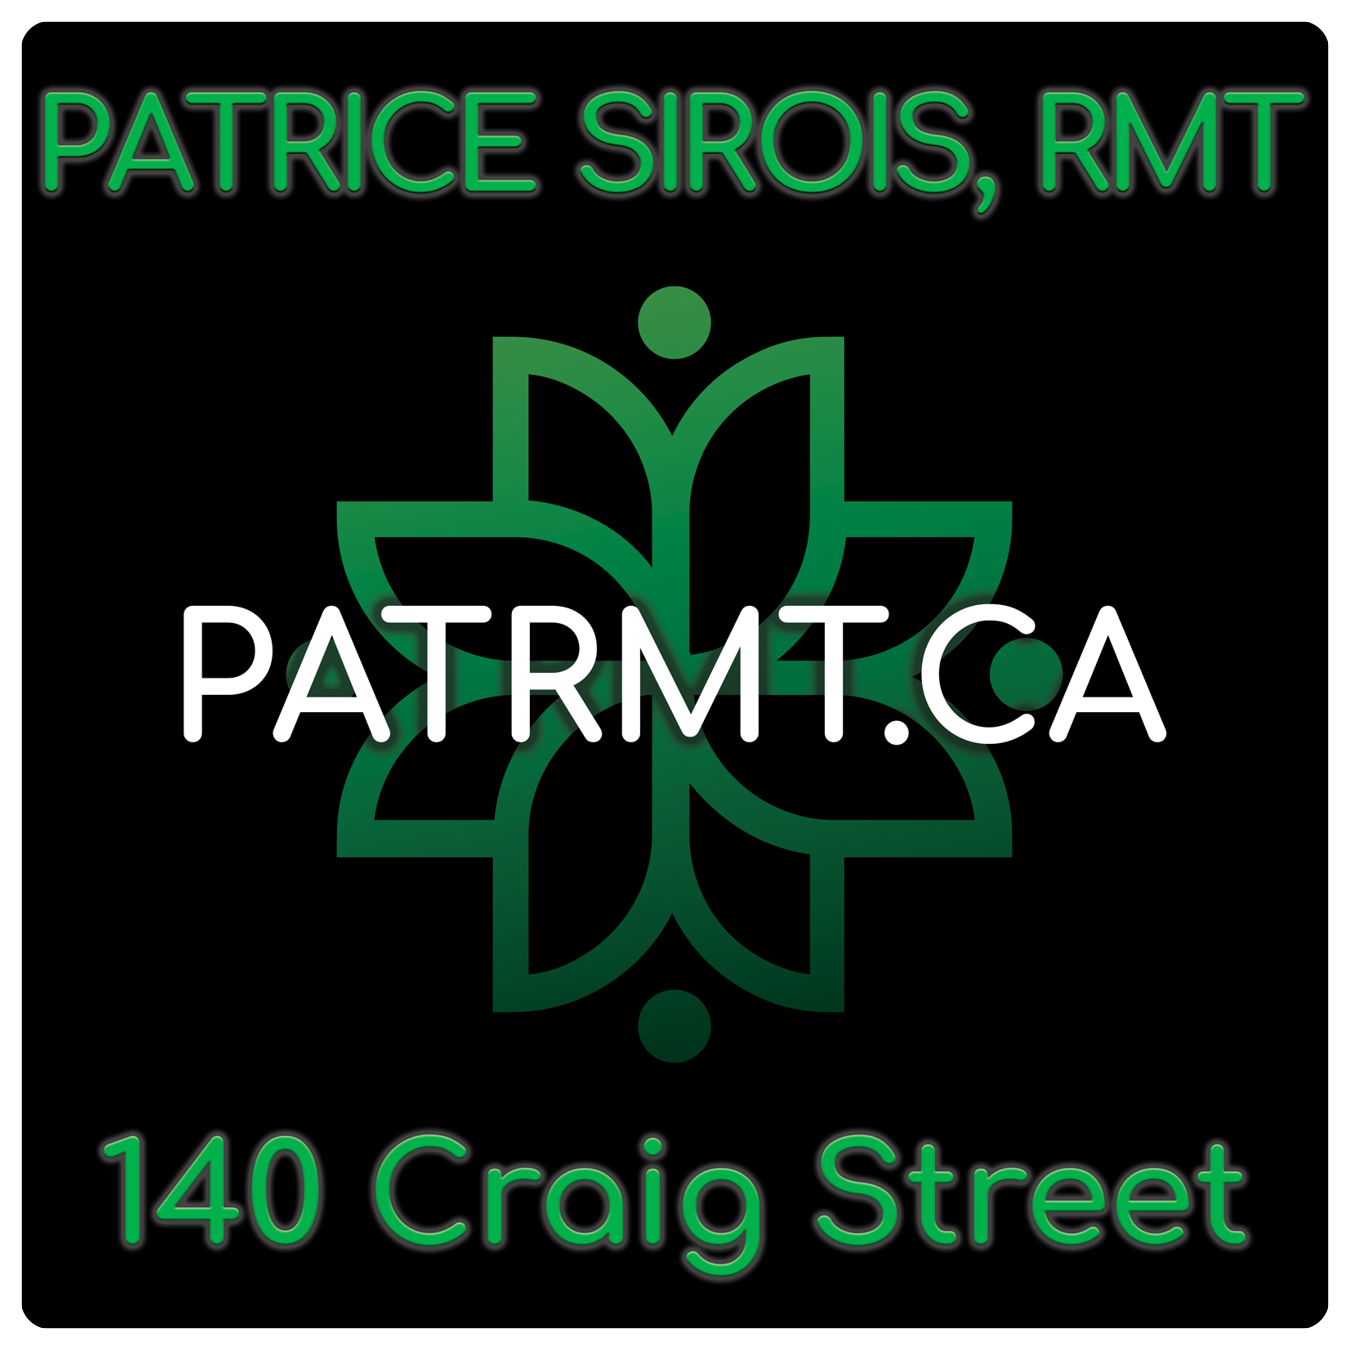 Patrice Sirois RMT